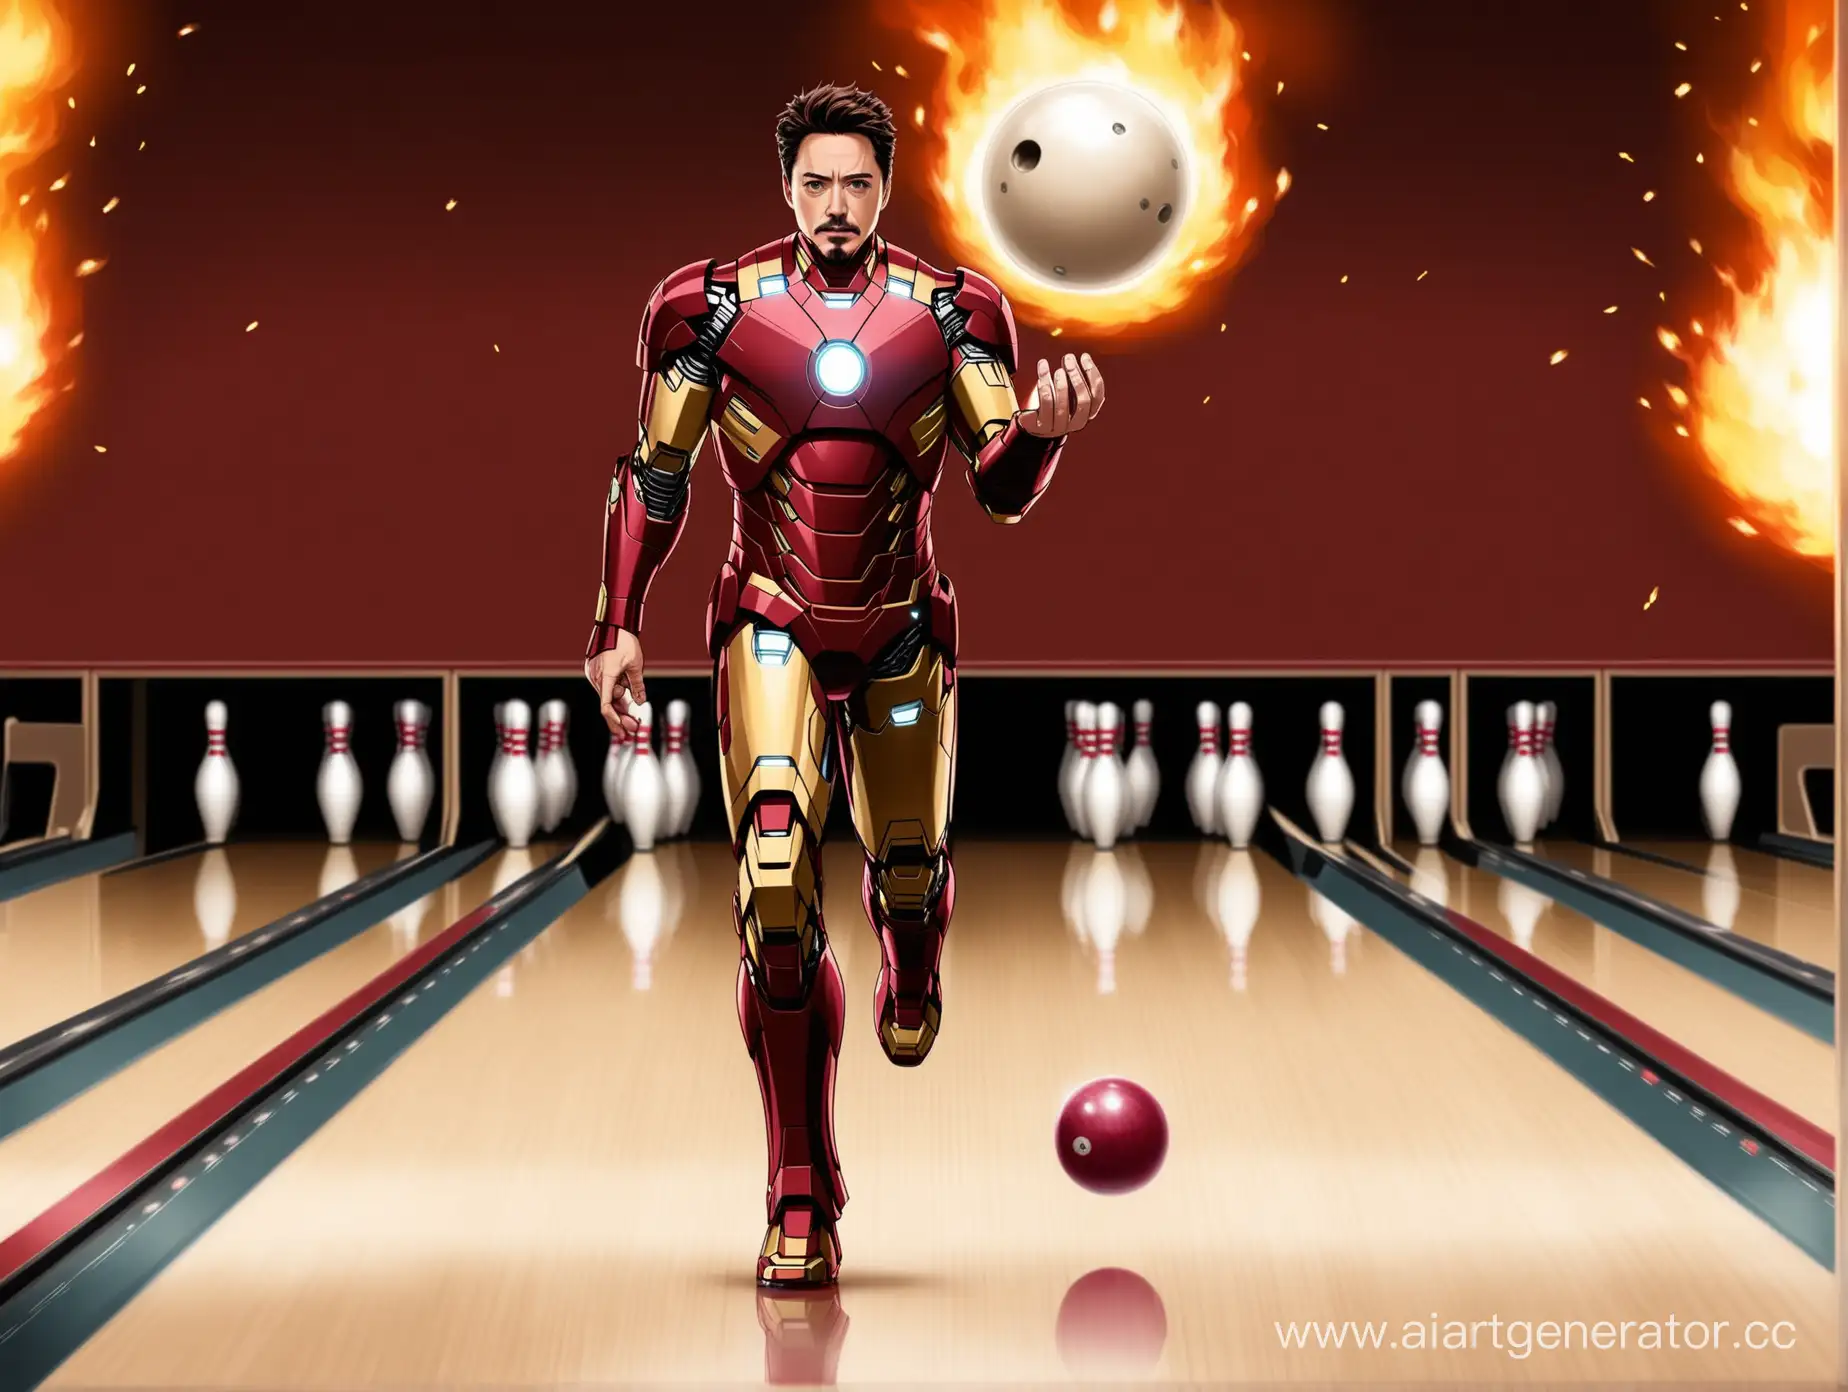 Iron-Man-Bowling-Tony-Stark-Strikes-with-Fiery-Precision-in-4K